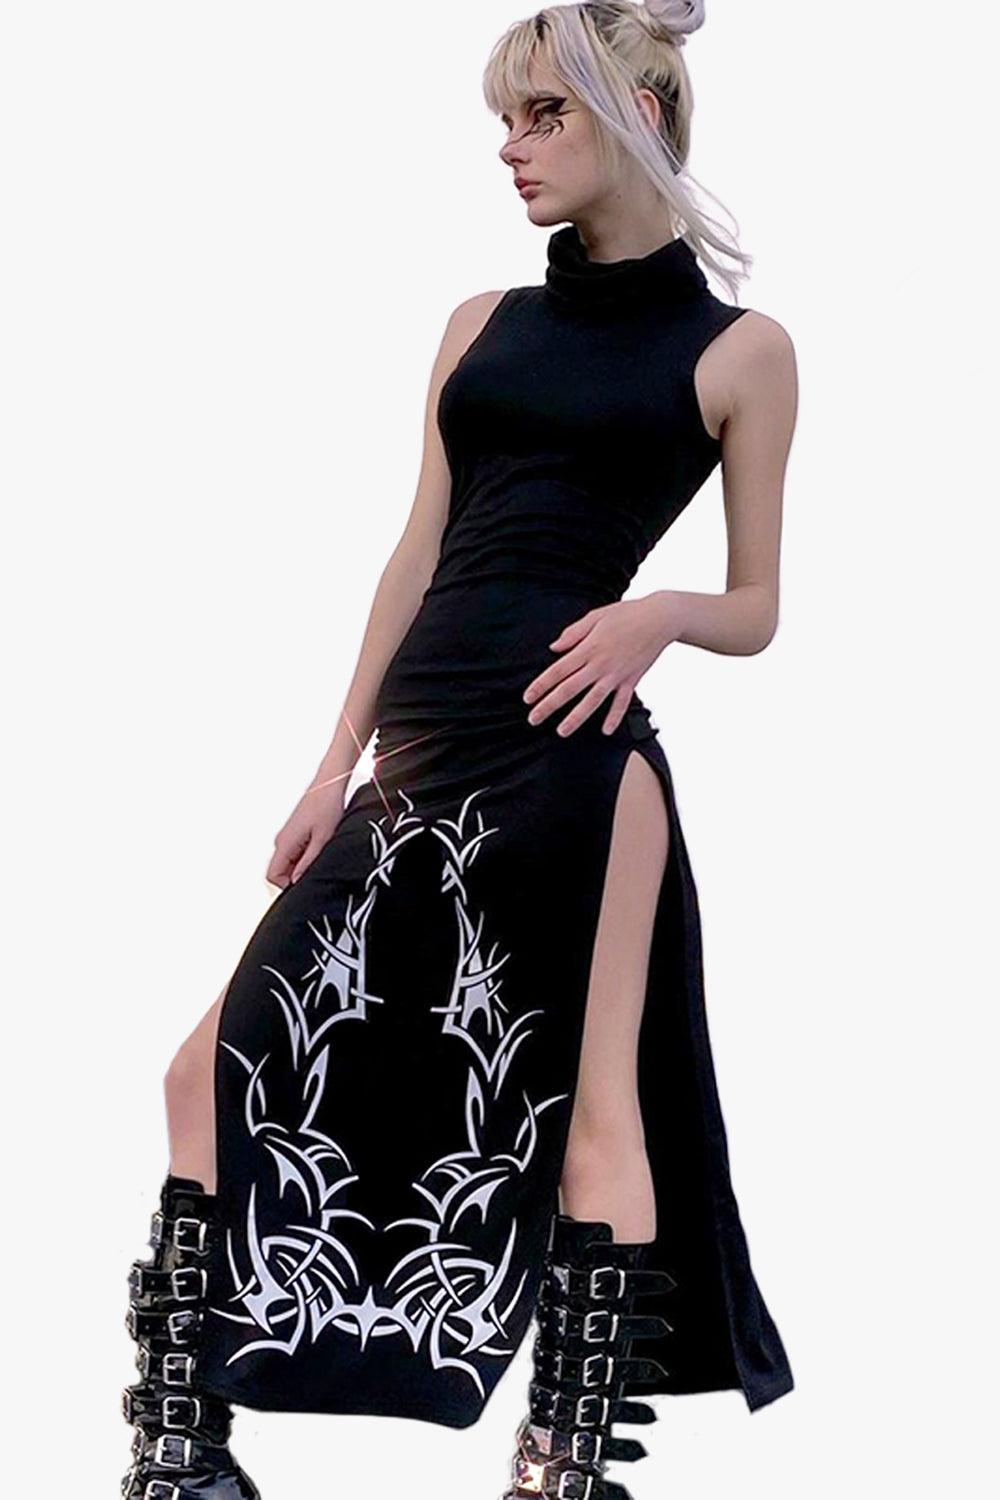 Darkcore Long Sleeveless Black Dress - Aesthetic Clothes Shop